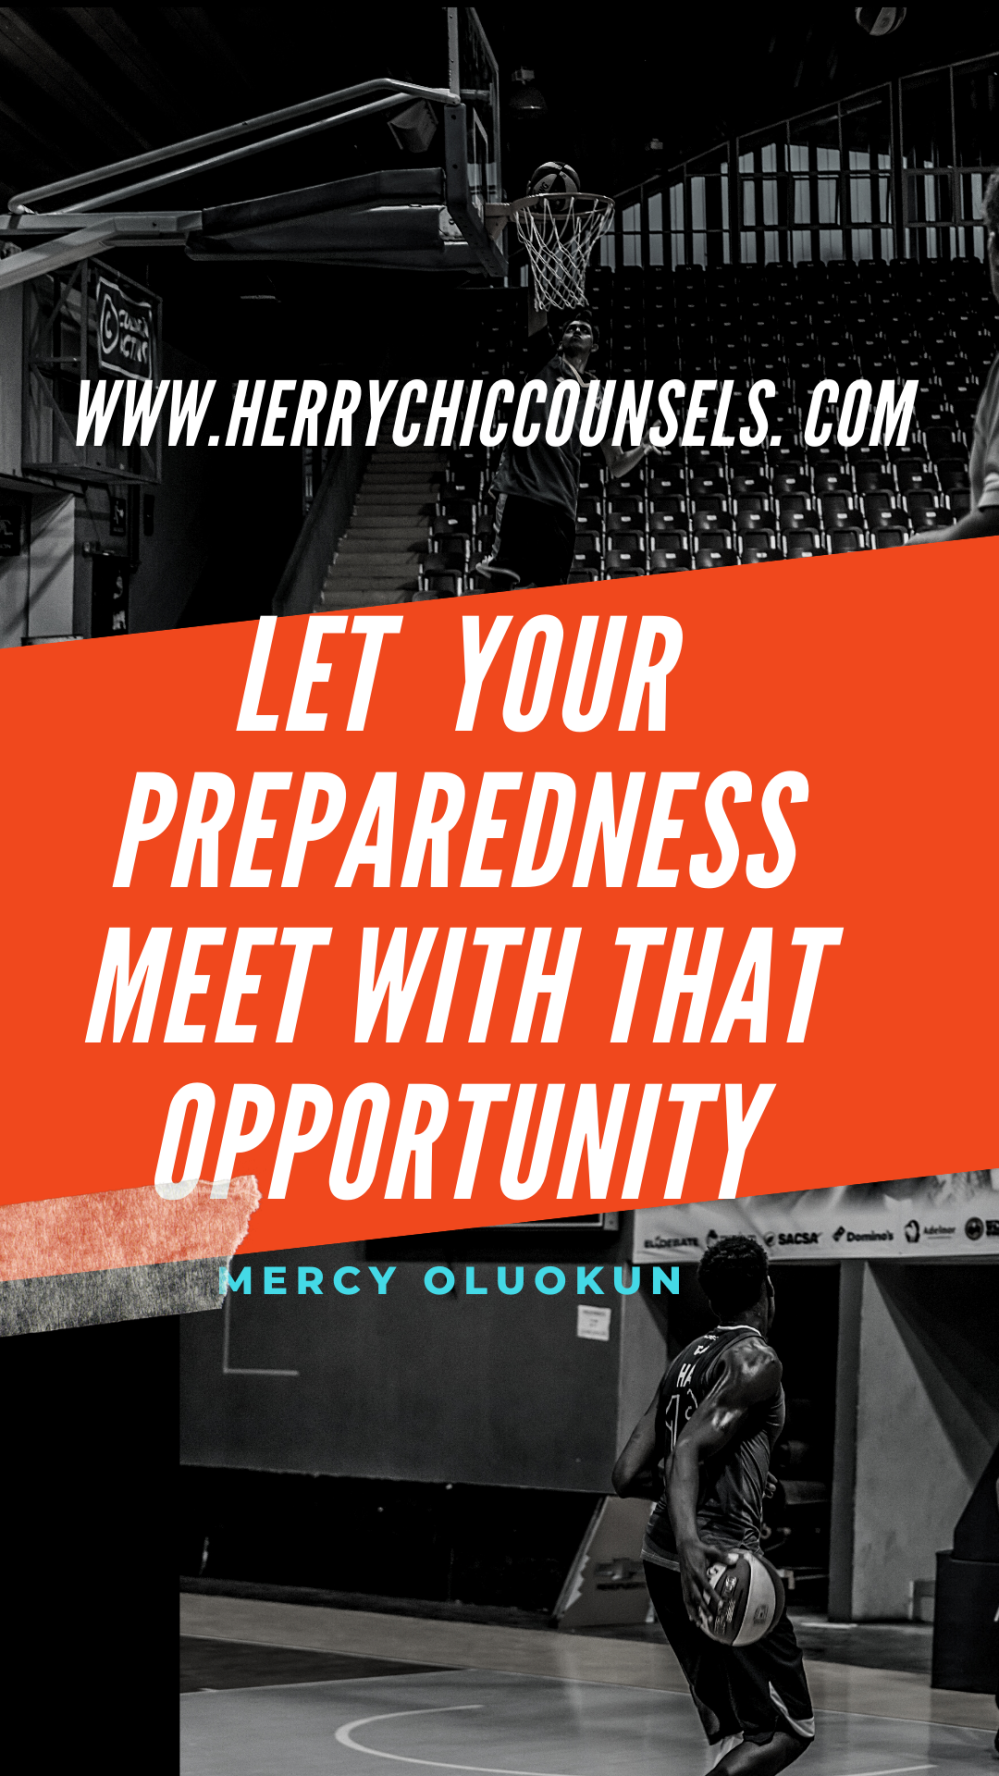 Preparedness - opportunity